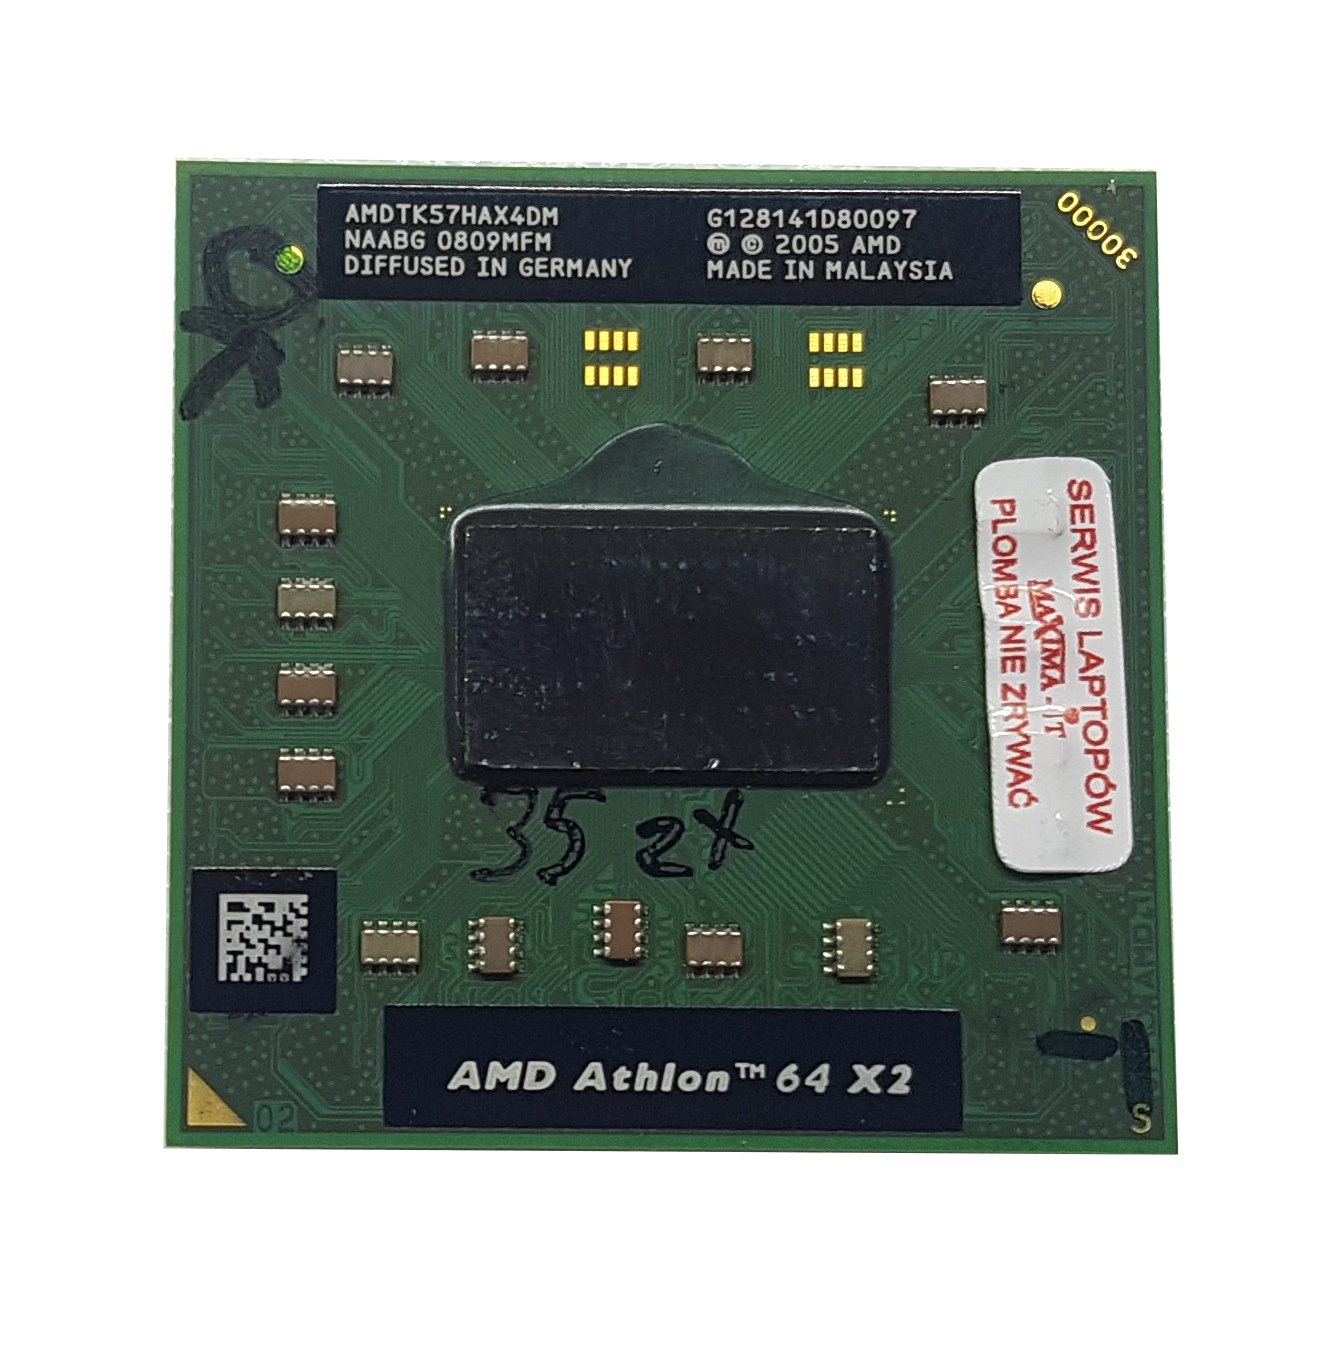 AMD Turion 64 X2 TK-57 2 x 1.9 MHz AMDTK57HAX4DM